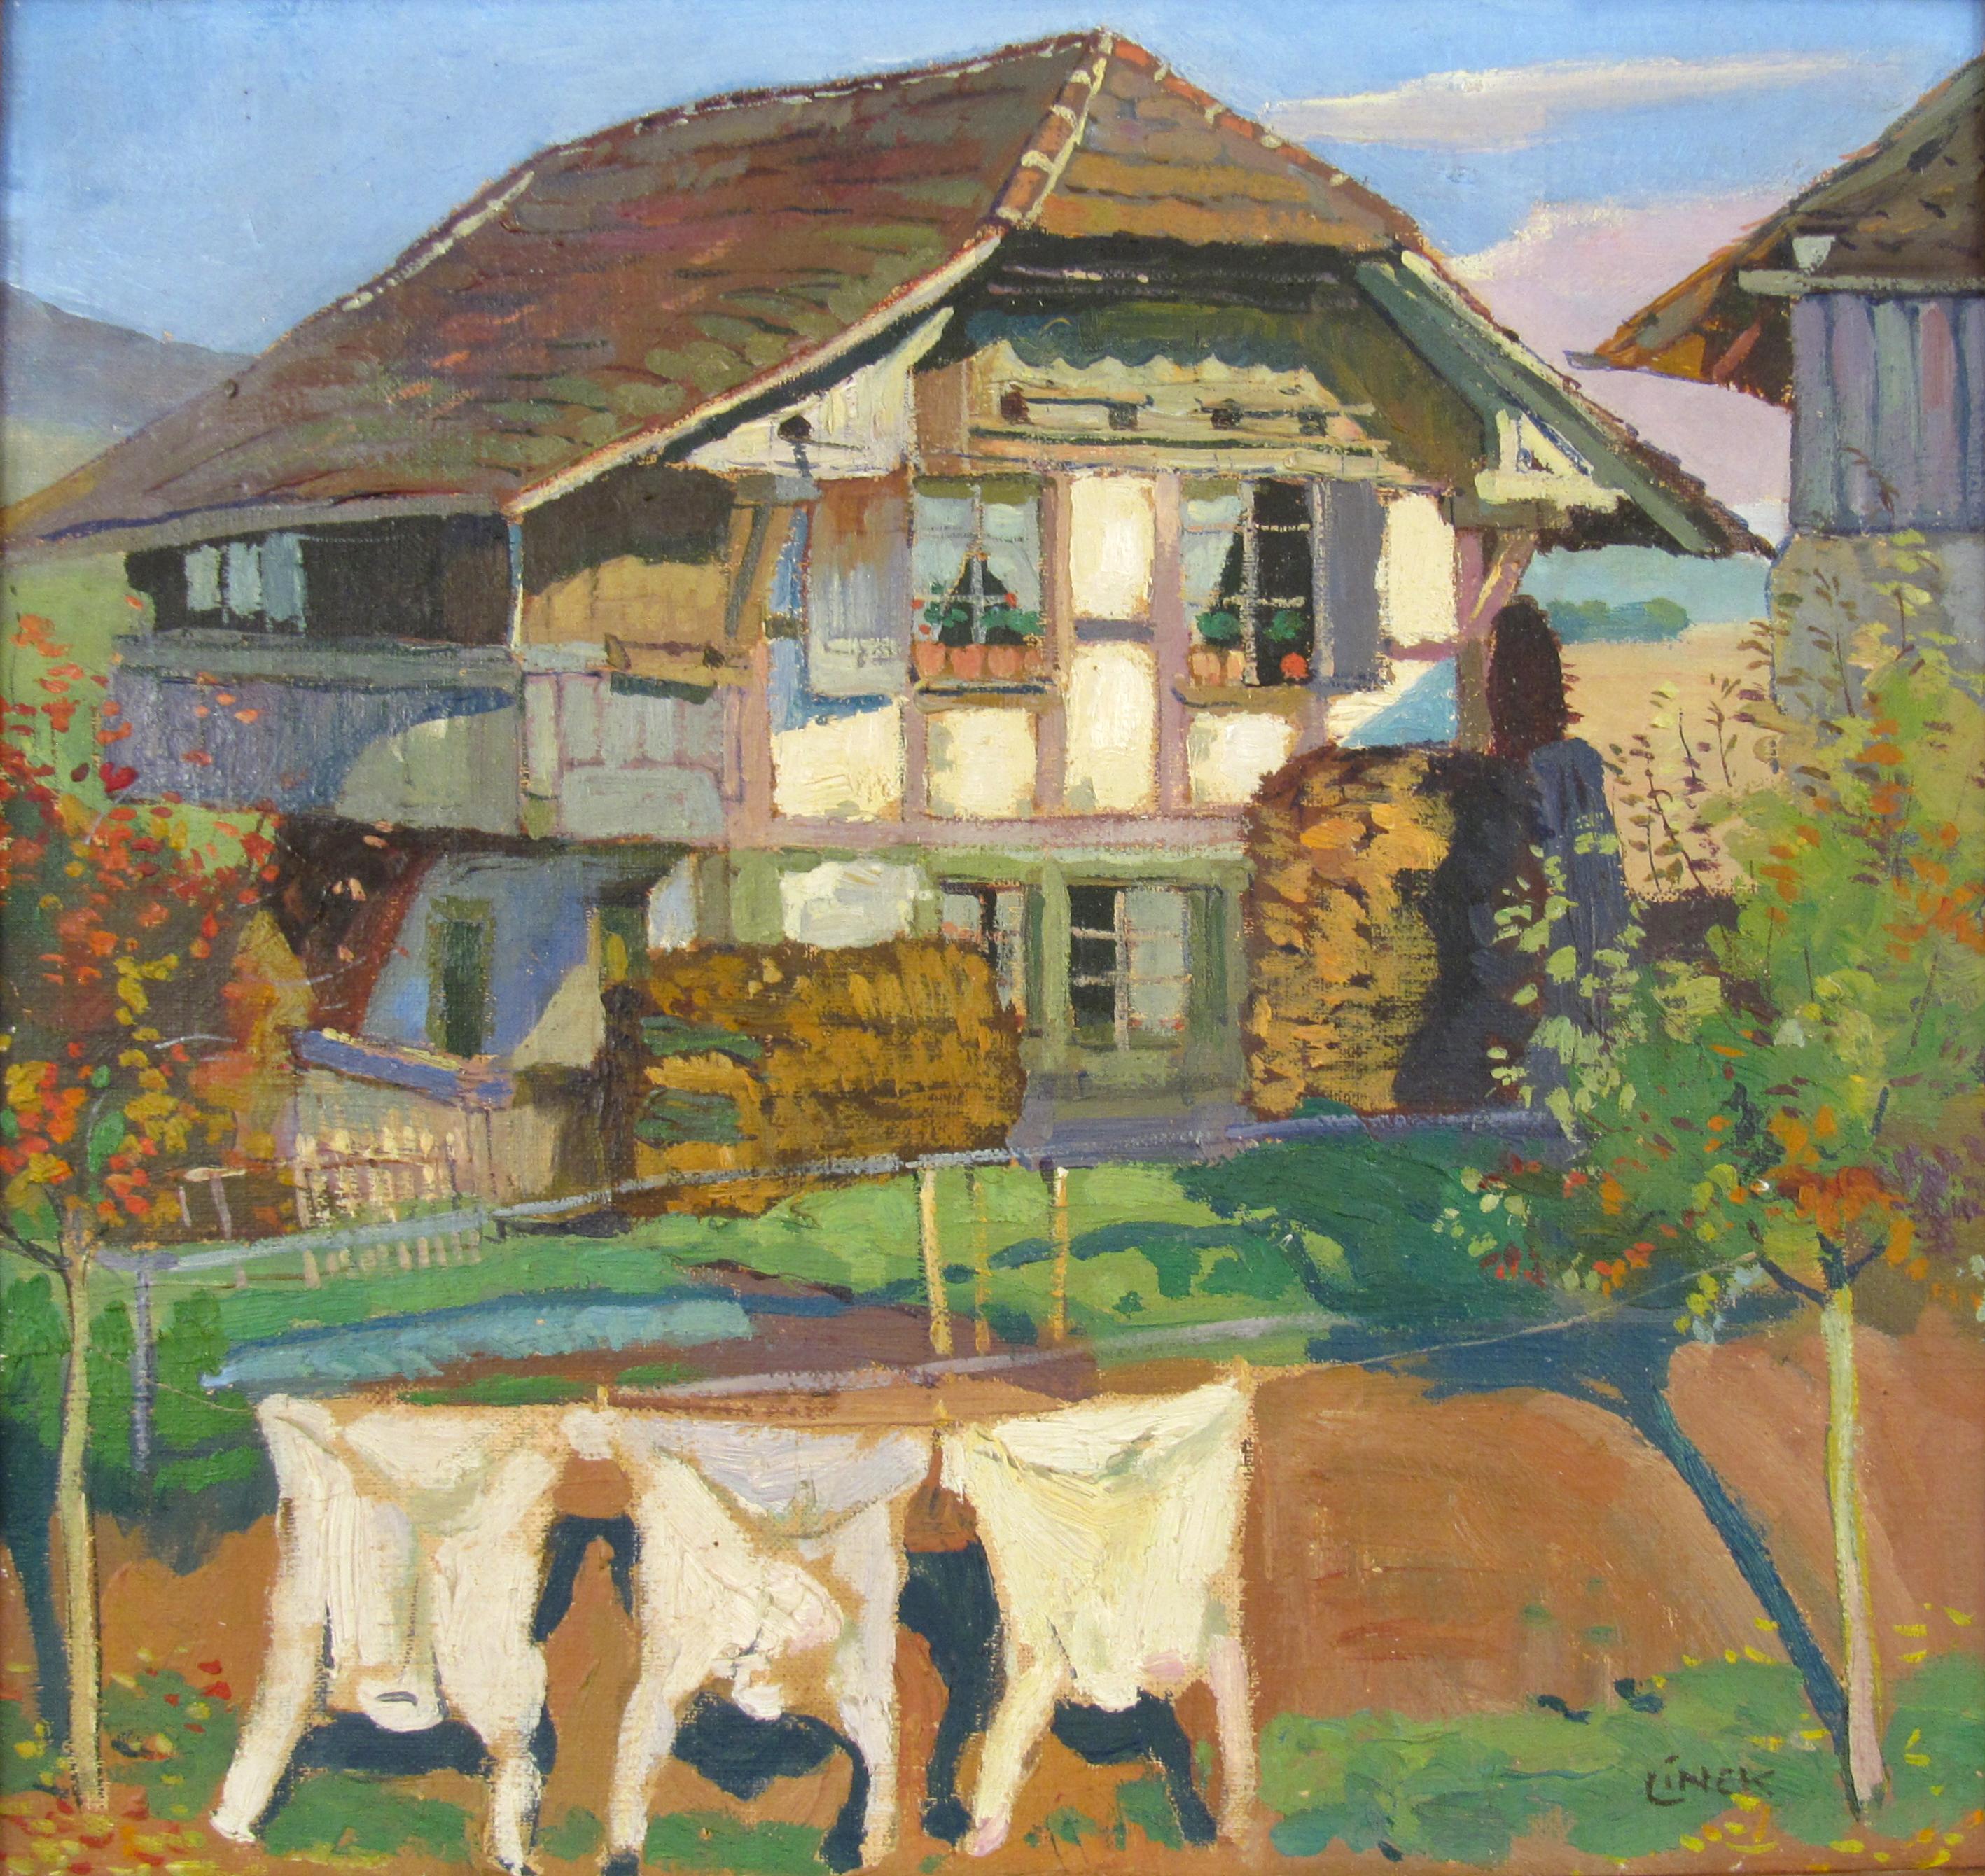 Ernst LINCK (1874 - 1935) Farmhouse with Clothesline School of Berne Switzerland - Post-Impressionist Painting by Ernst Linck